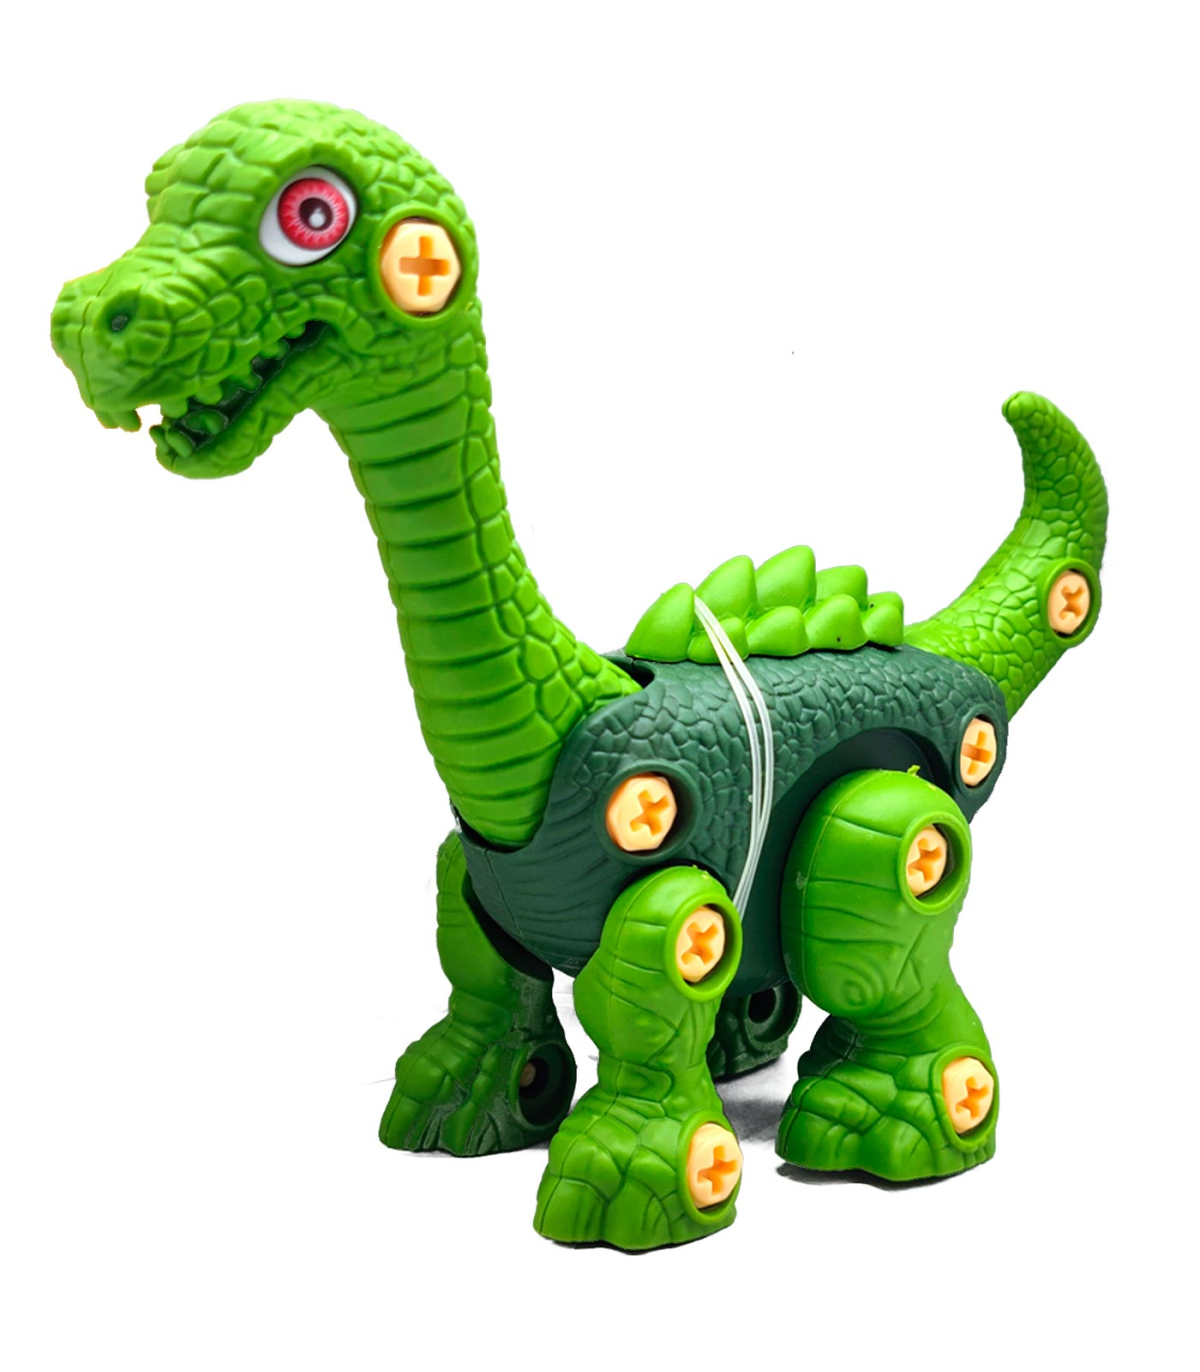 juguete dinosaurios